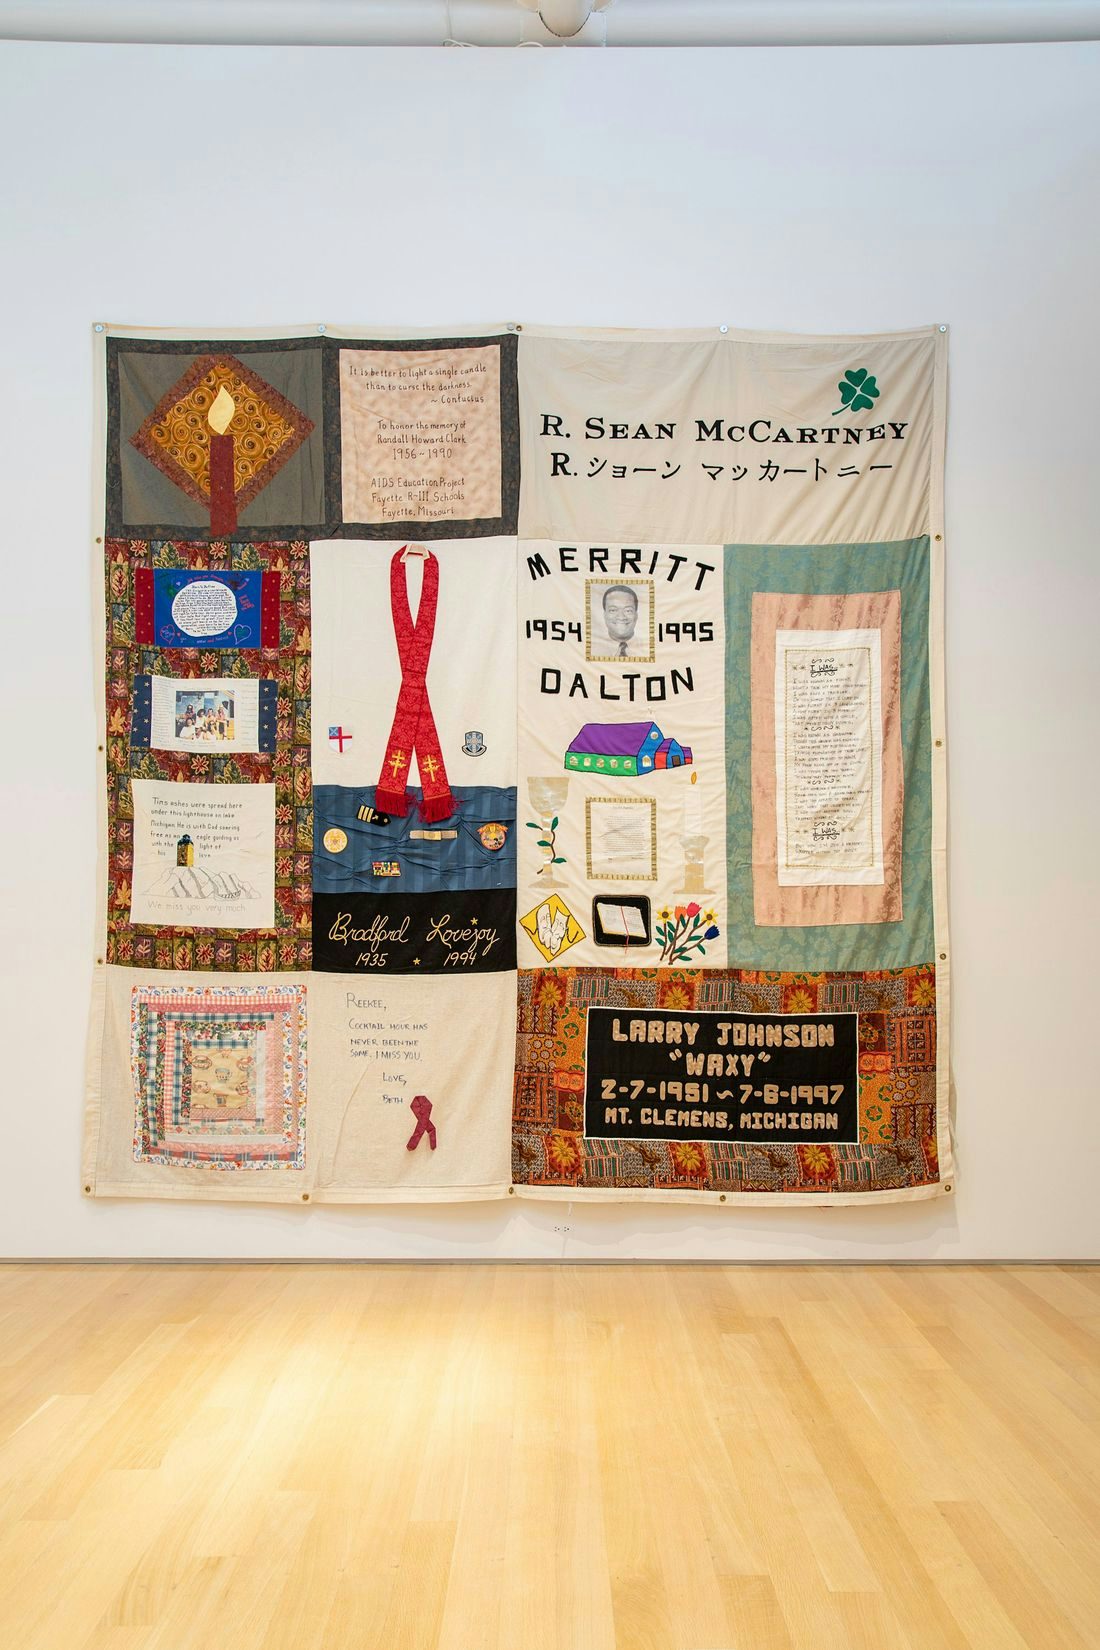 A close up image of an AIDS memorial quilt